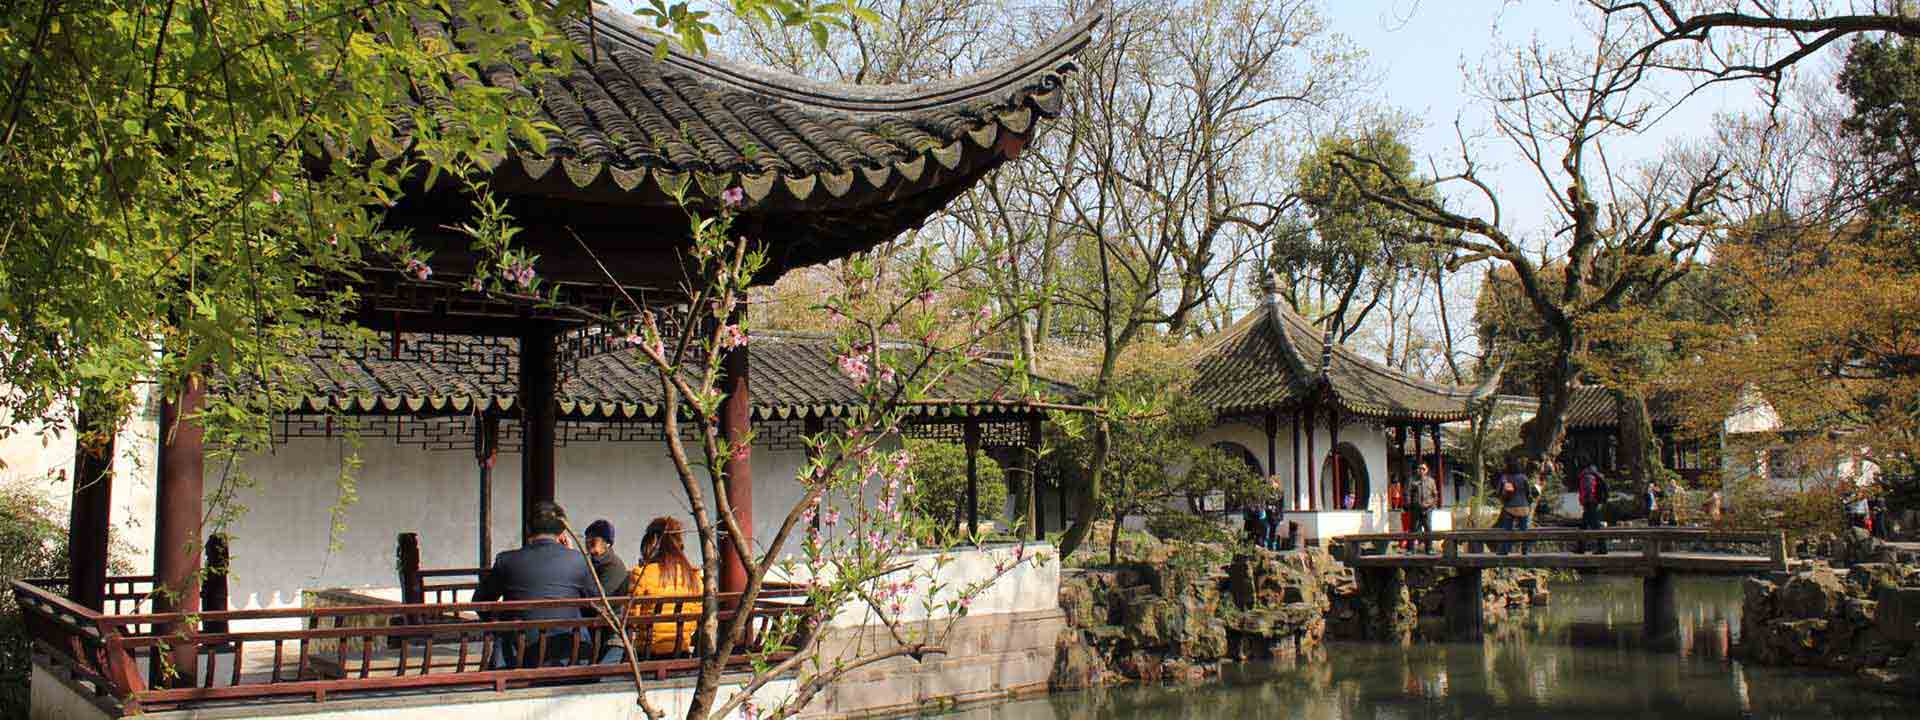 Jardines de Suzhou, Viajes a Suzhou